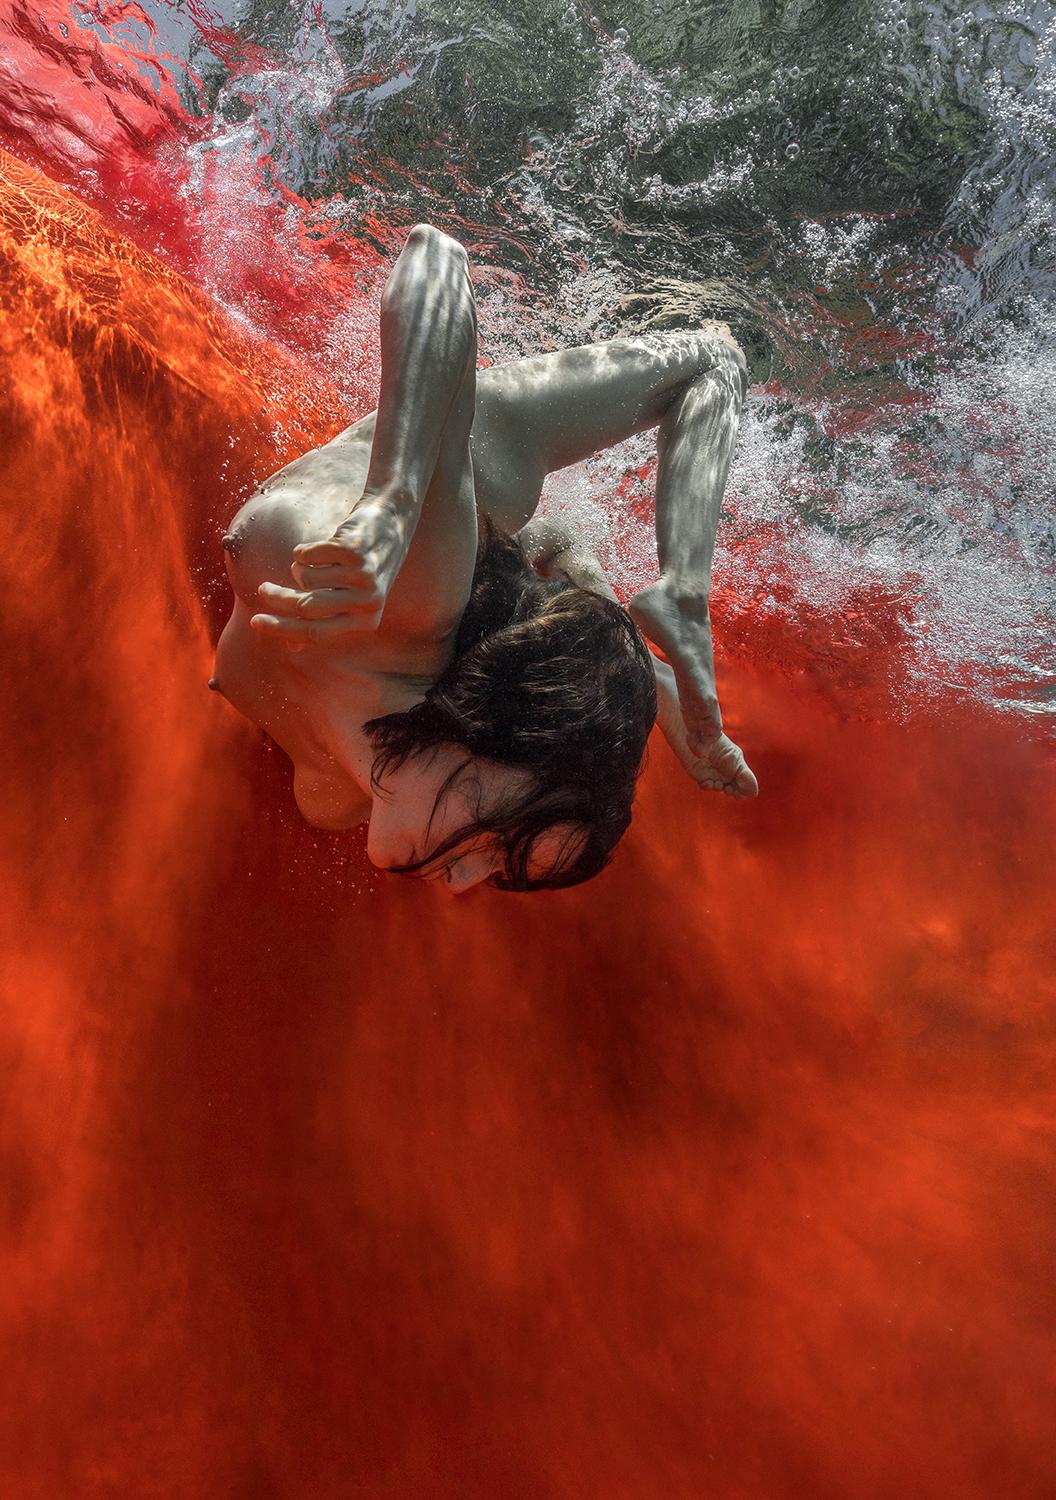 Alex Sher Abstract Photograph - Hot Pretzel - underwater nude photograph - archival pigment print 16"x23"